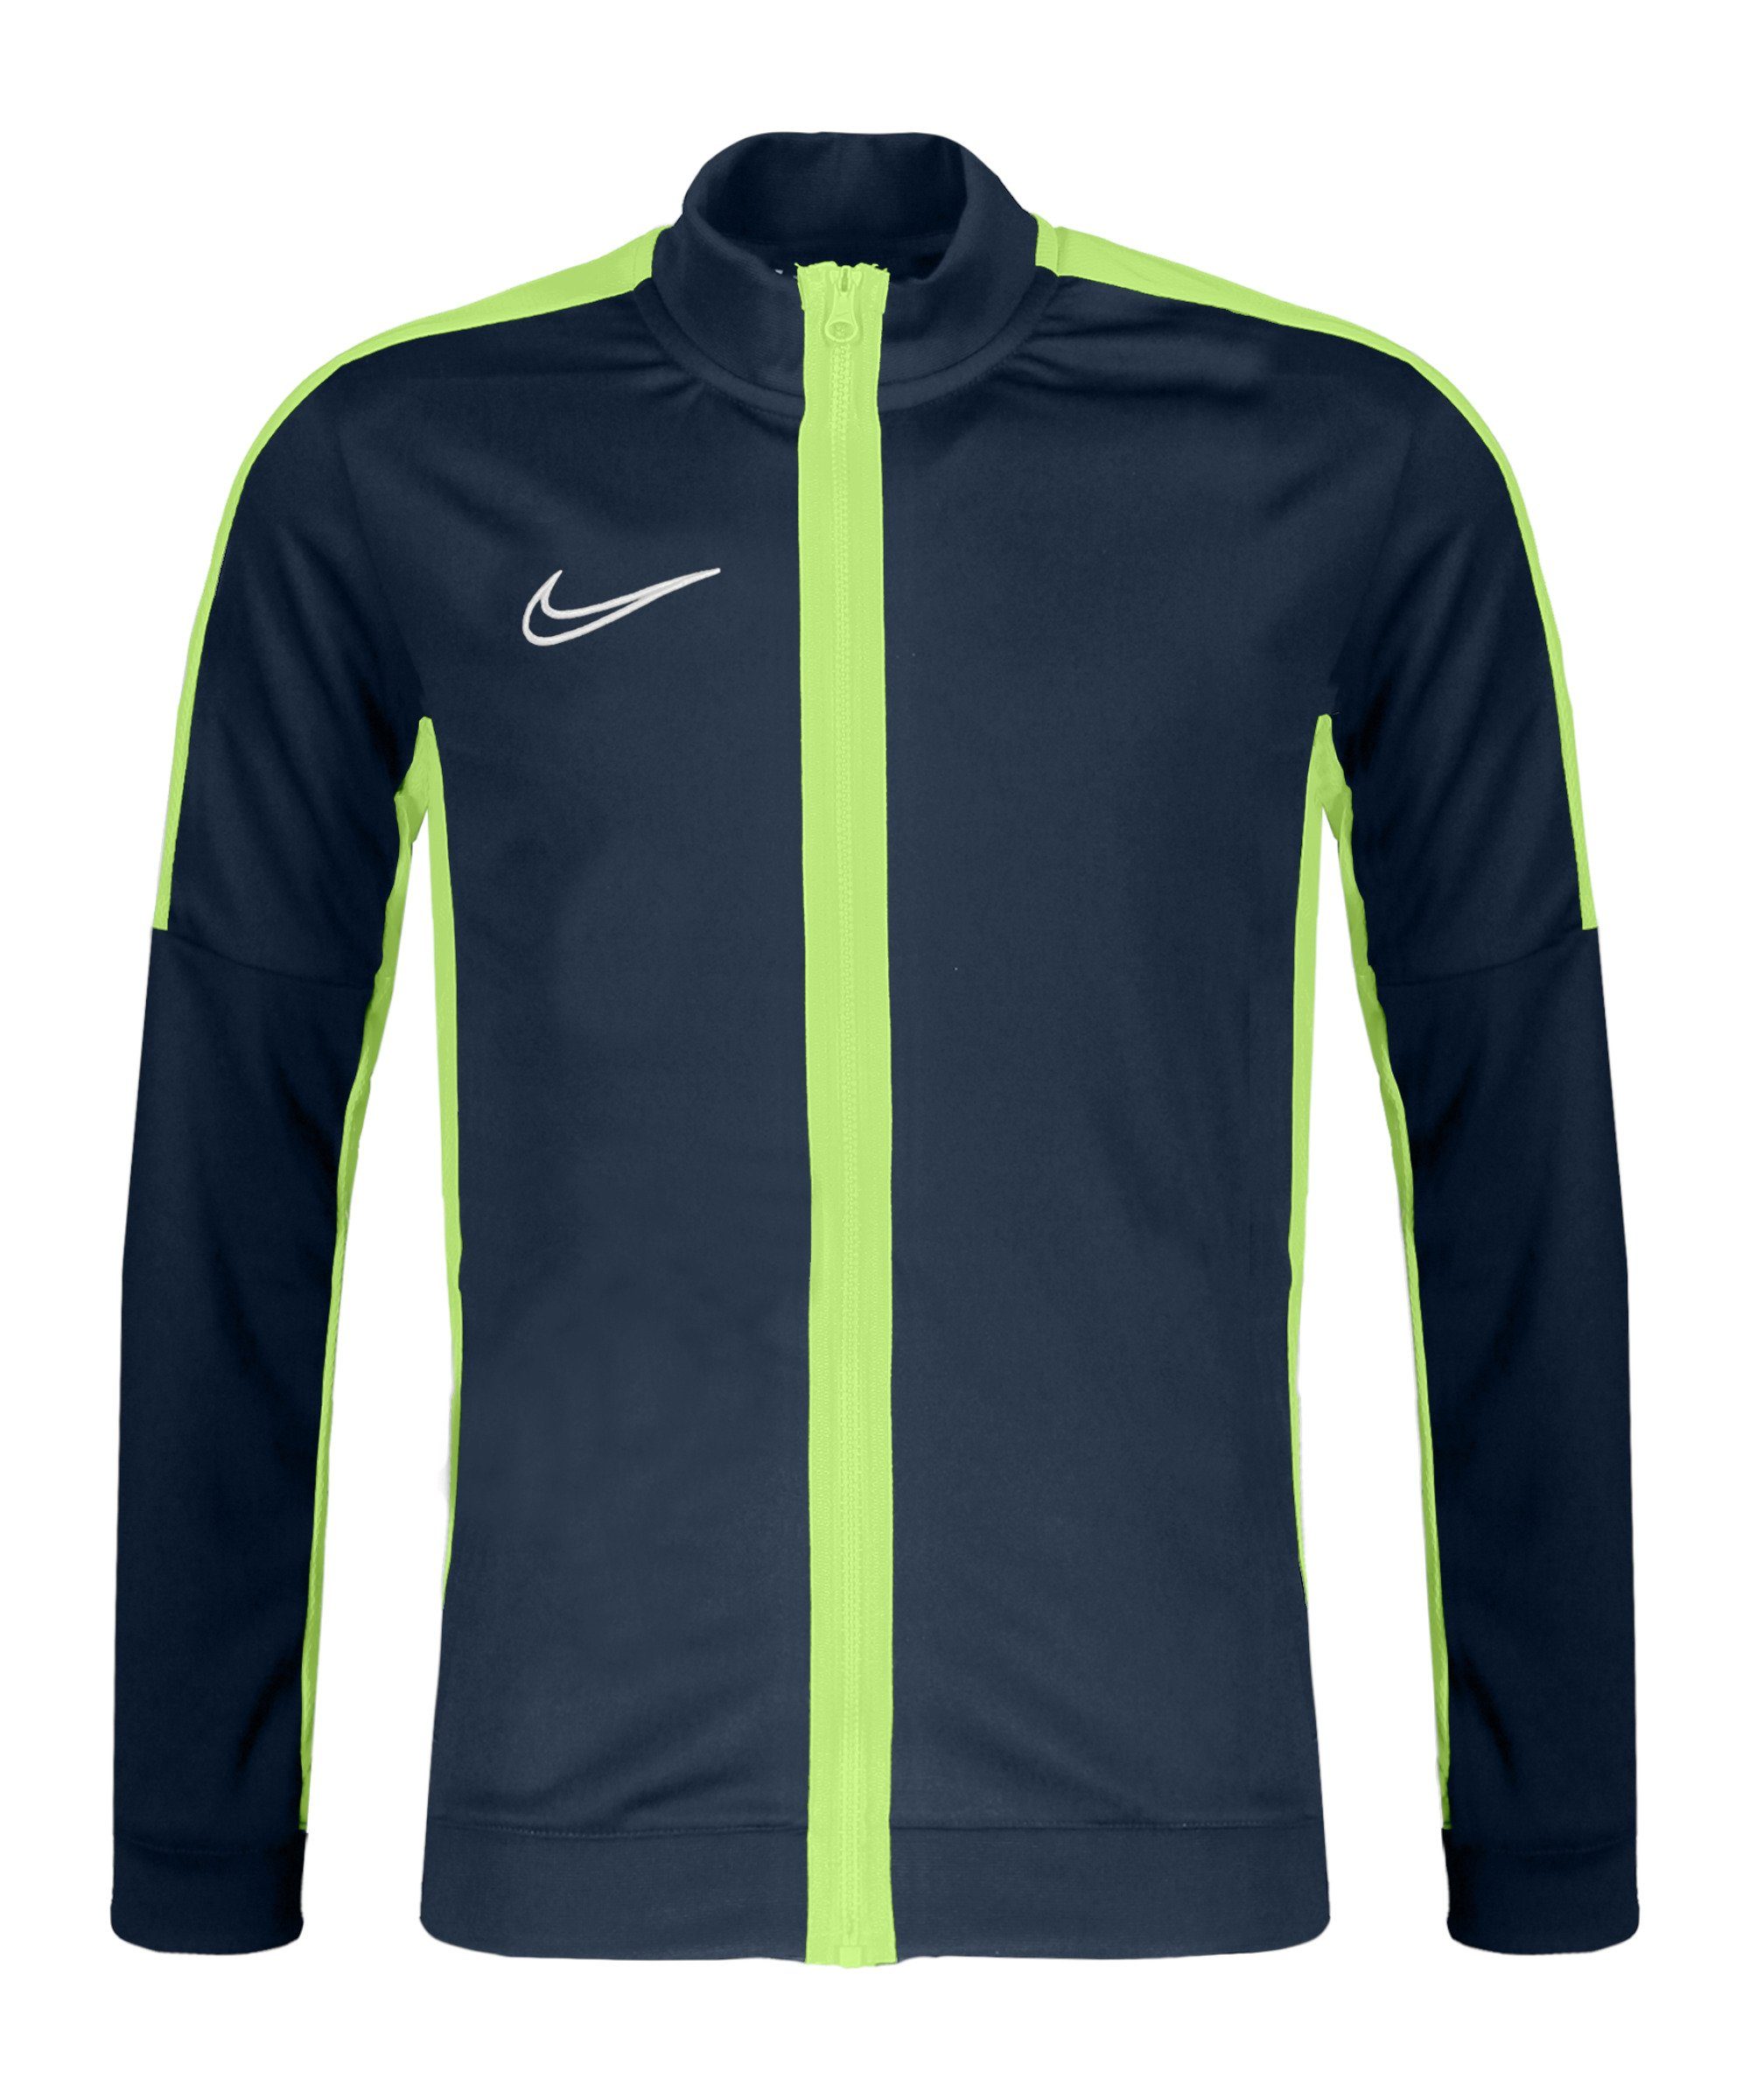 23 Academy Nike Sweatjacke blaugrauweiss Trainingsjacke